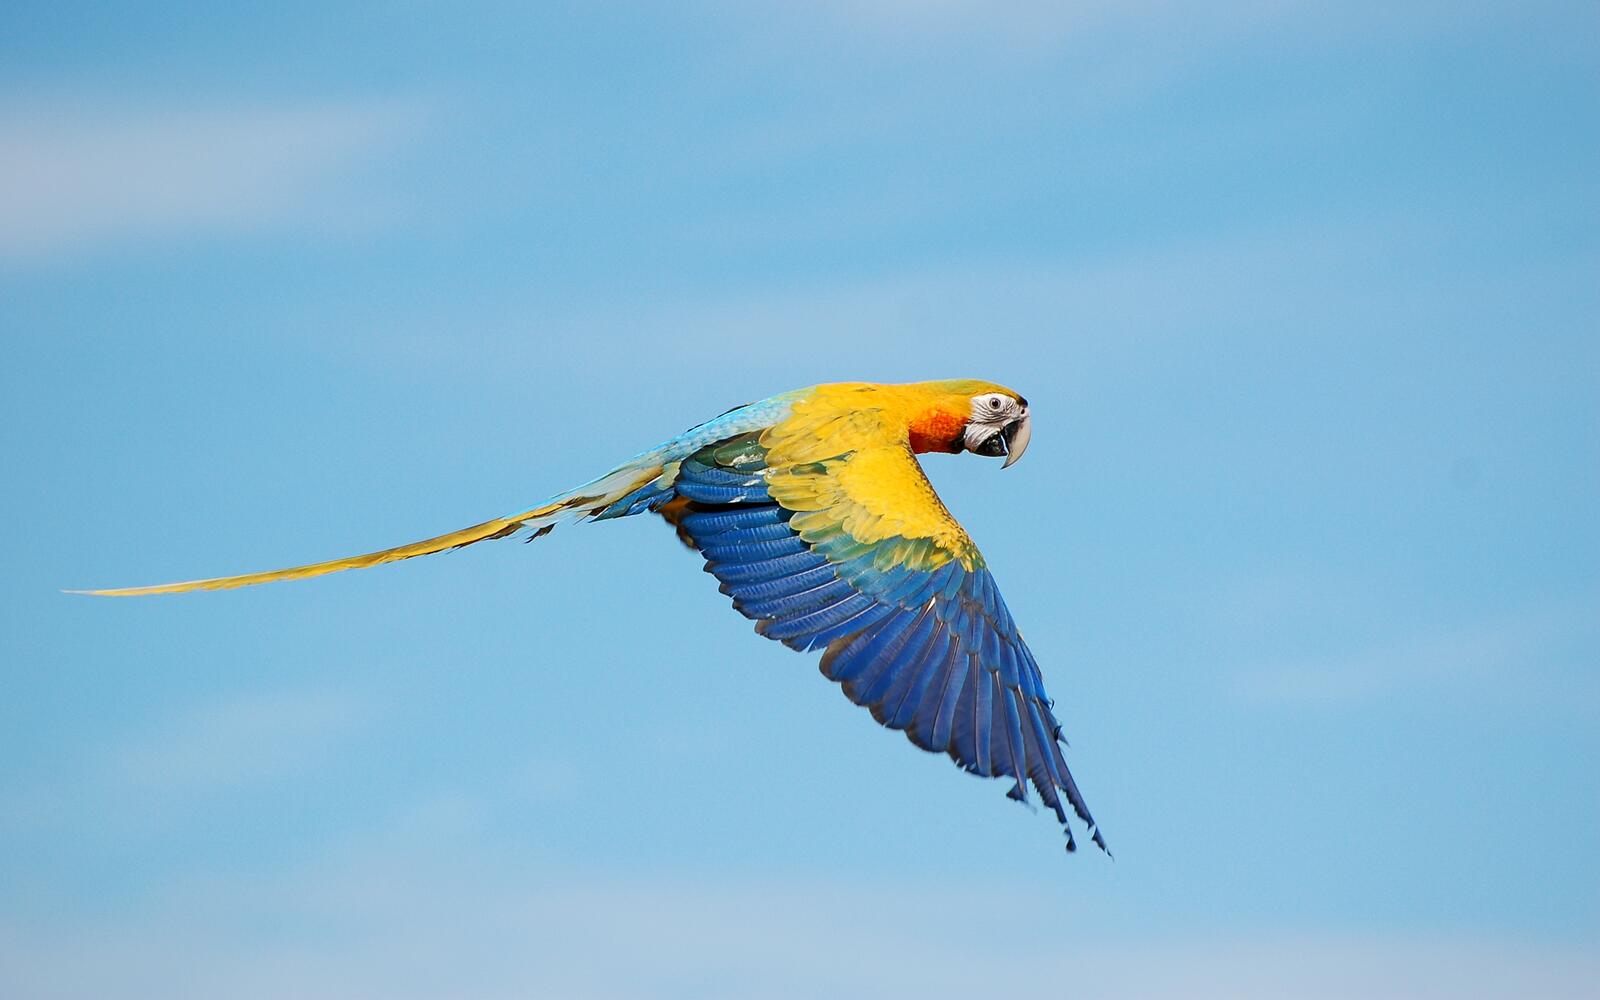 Wallpapers flight sky parrot on the desktop